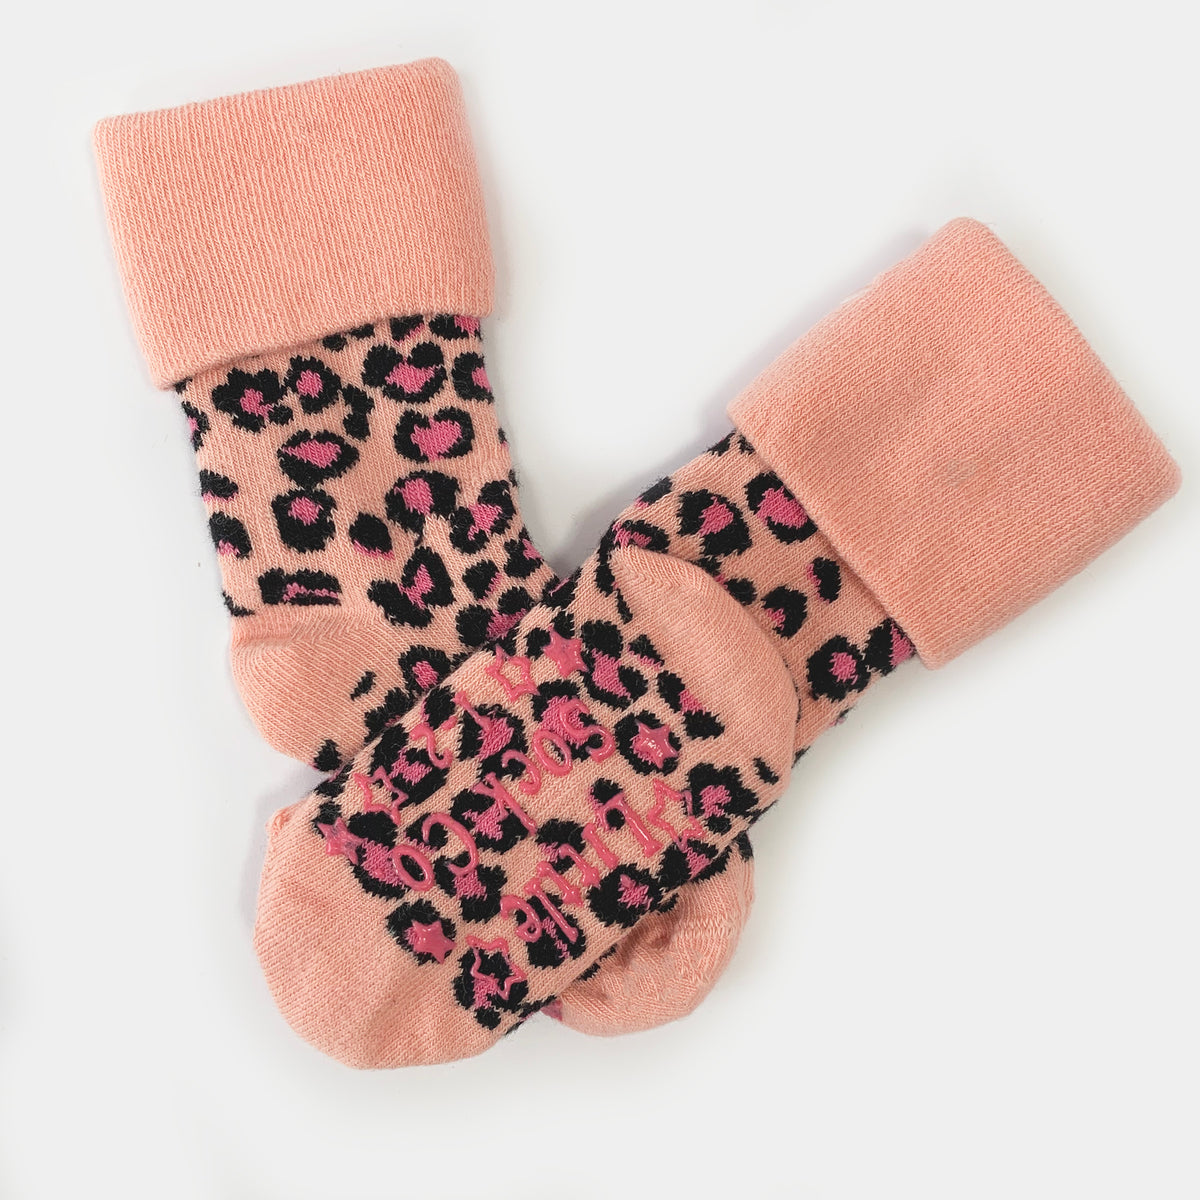 Socks Super Set - Sporty + Originals - Pink